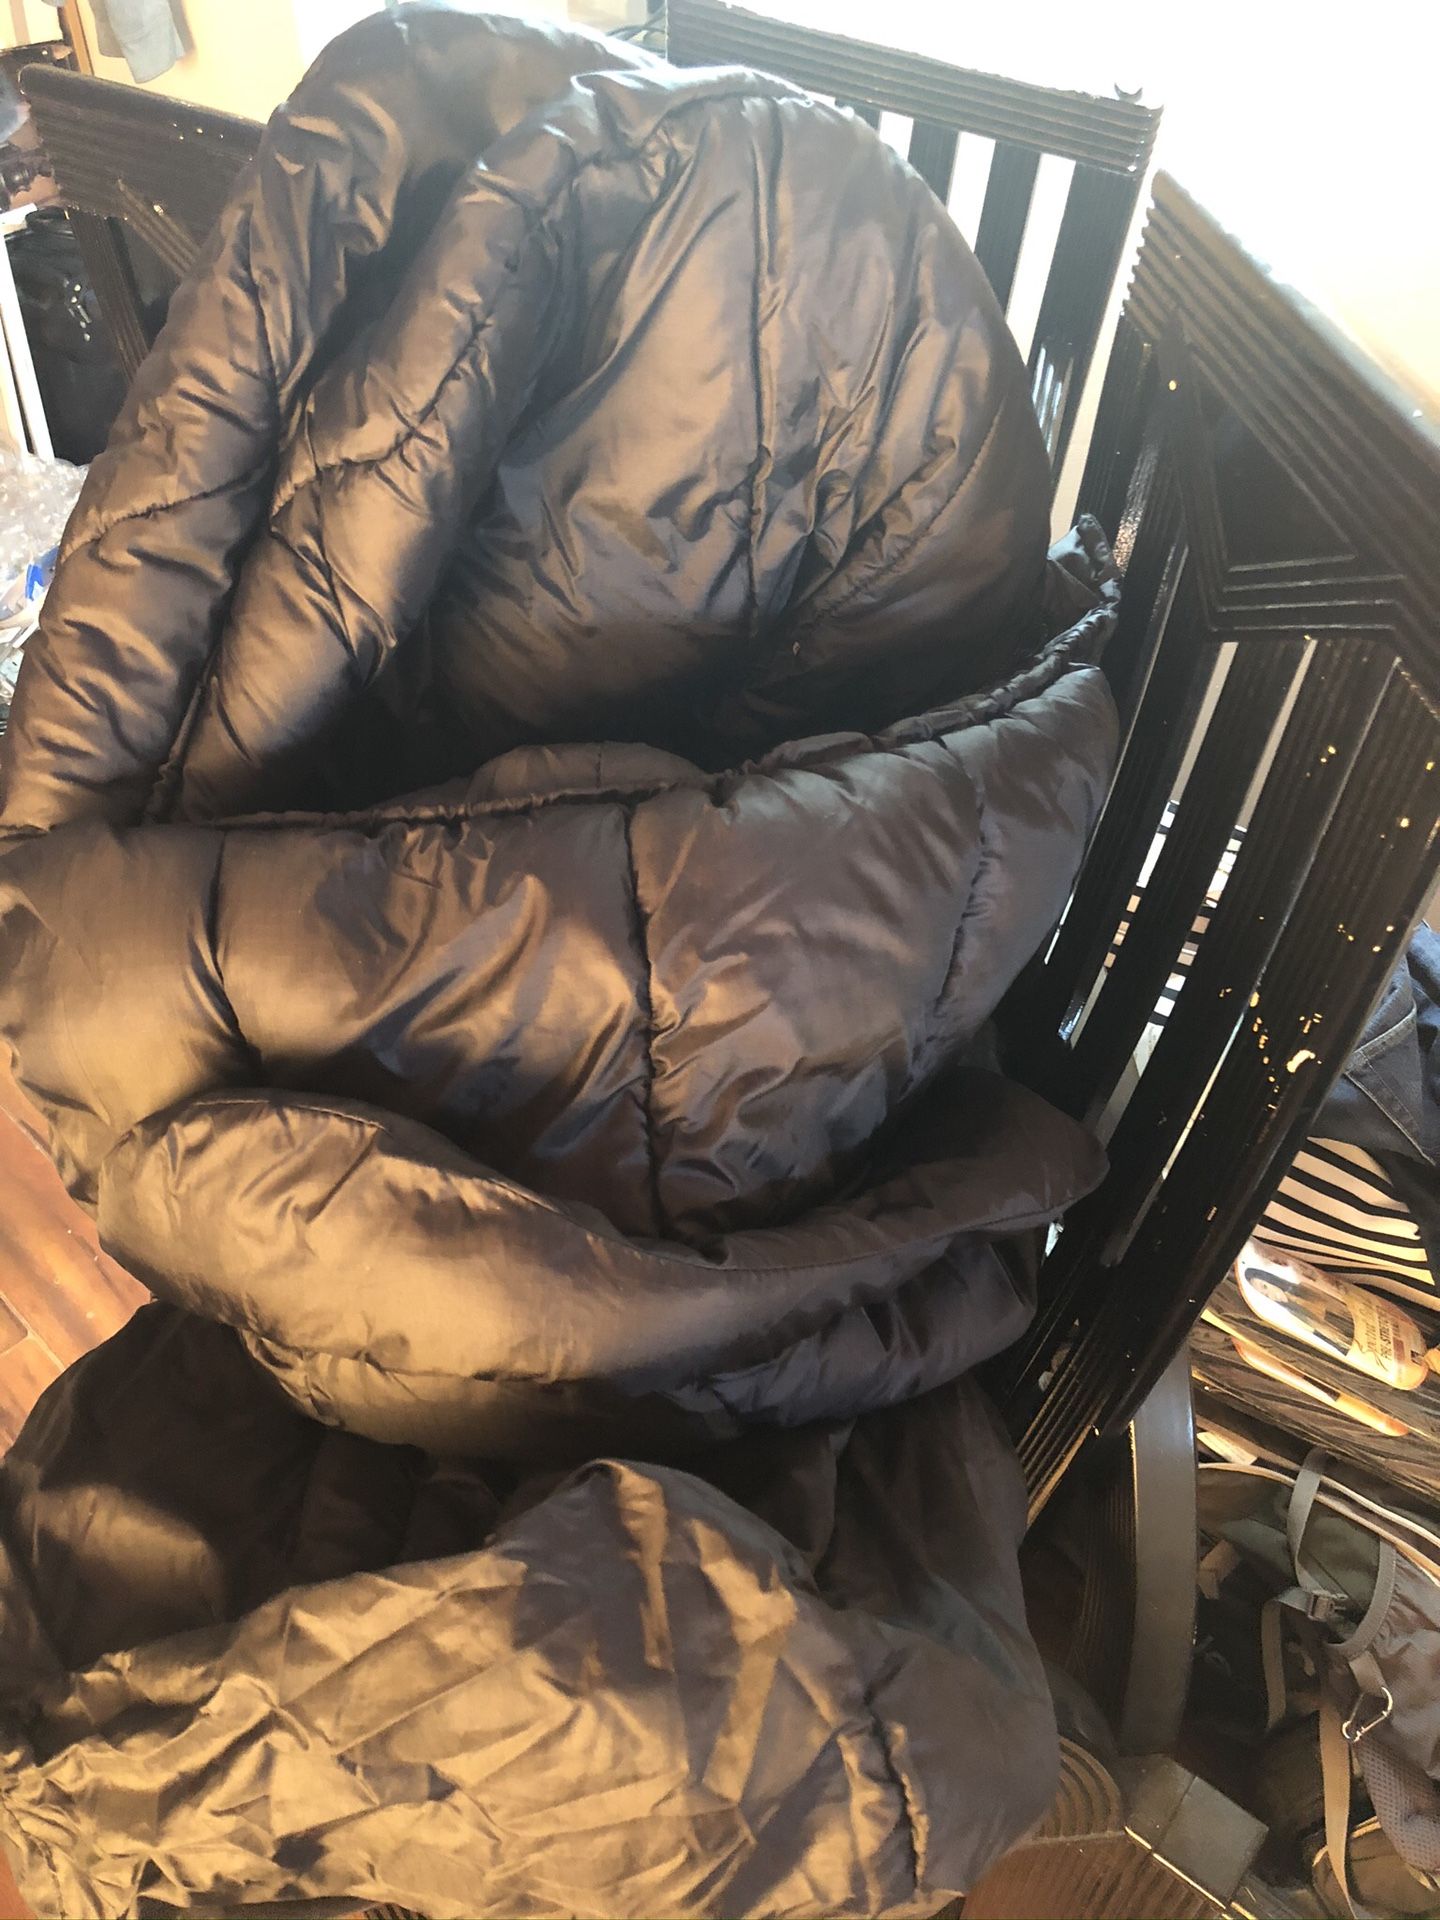 6ft Modular Sleeping Bag - Intermediate Cold